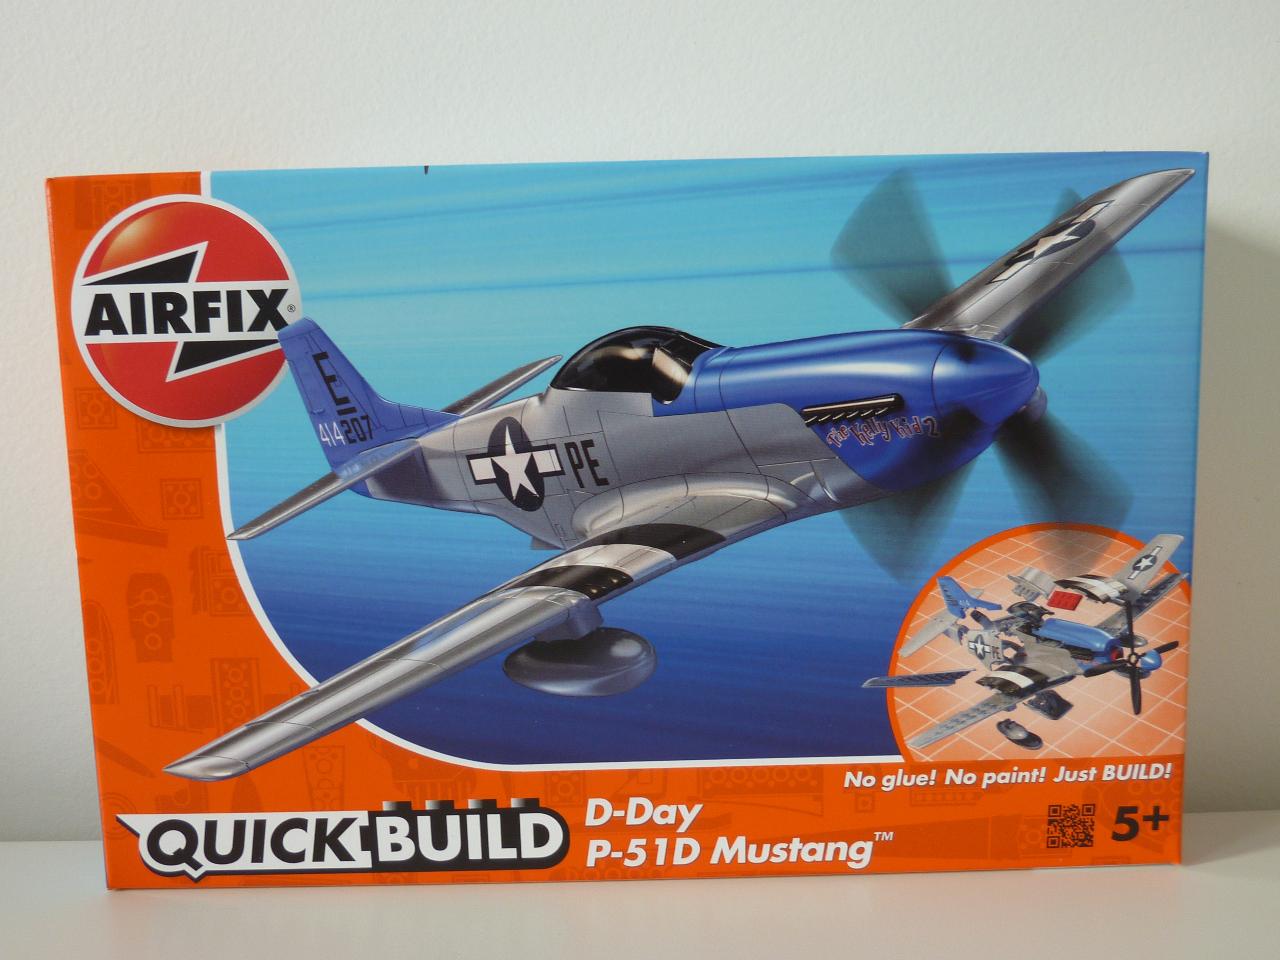 SHOP: GIFTS - Airfix QuickBuild Model   D-Day P-51D Mustang